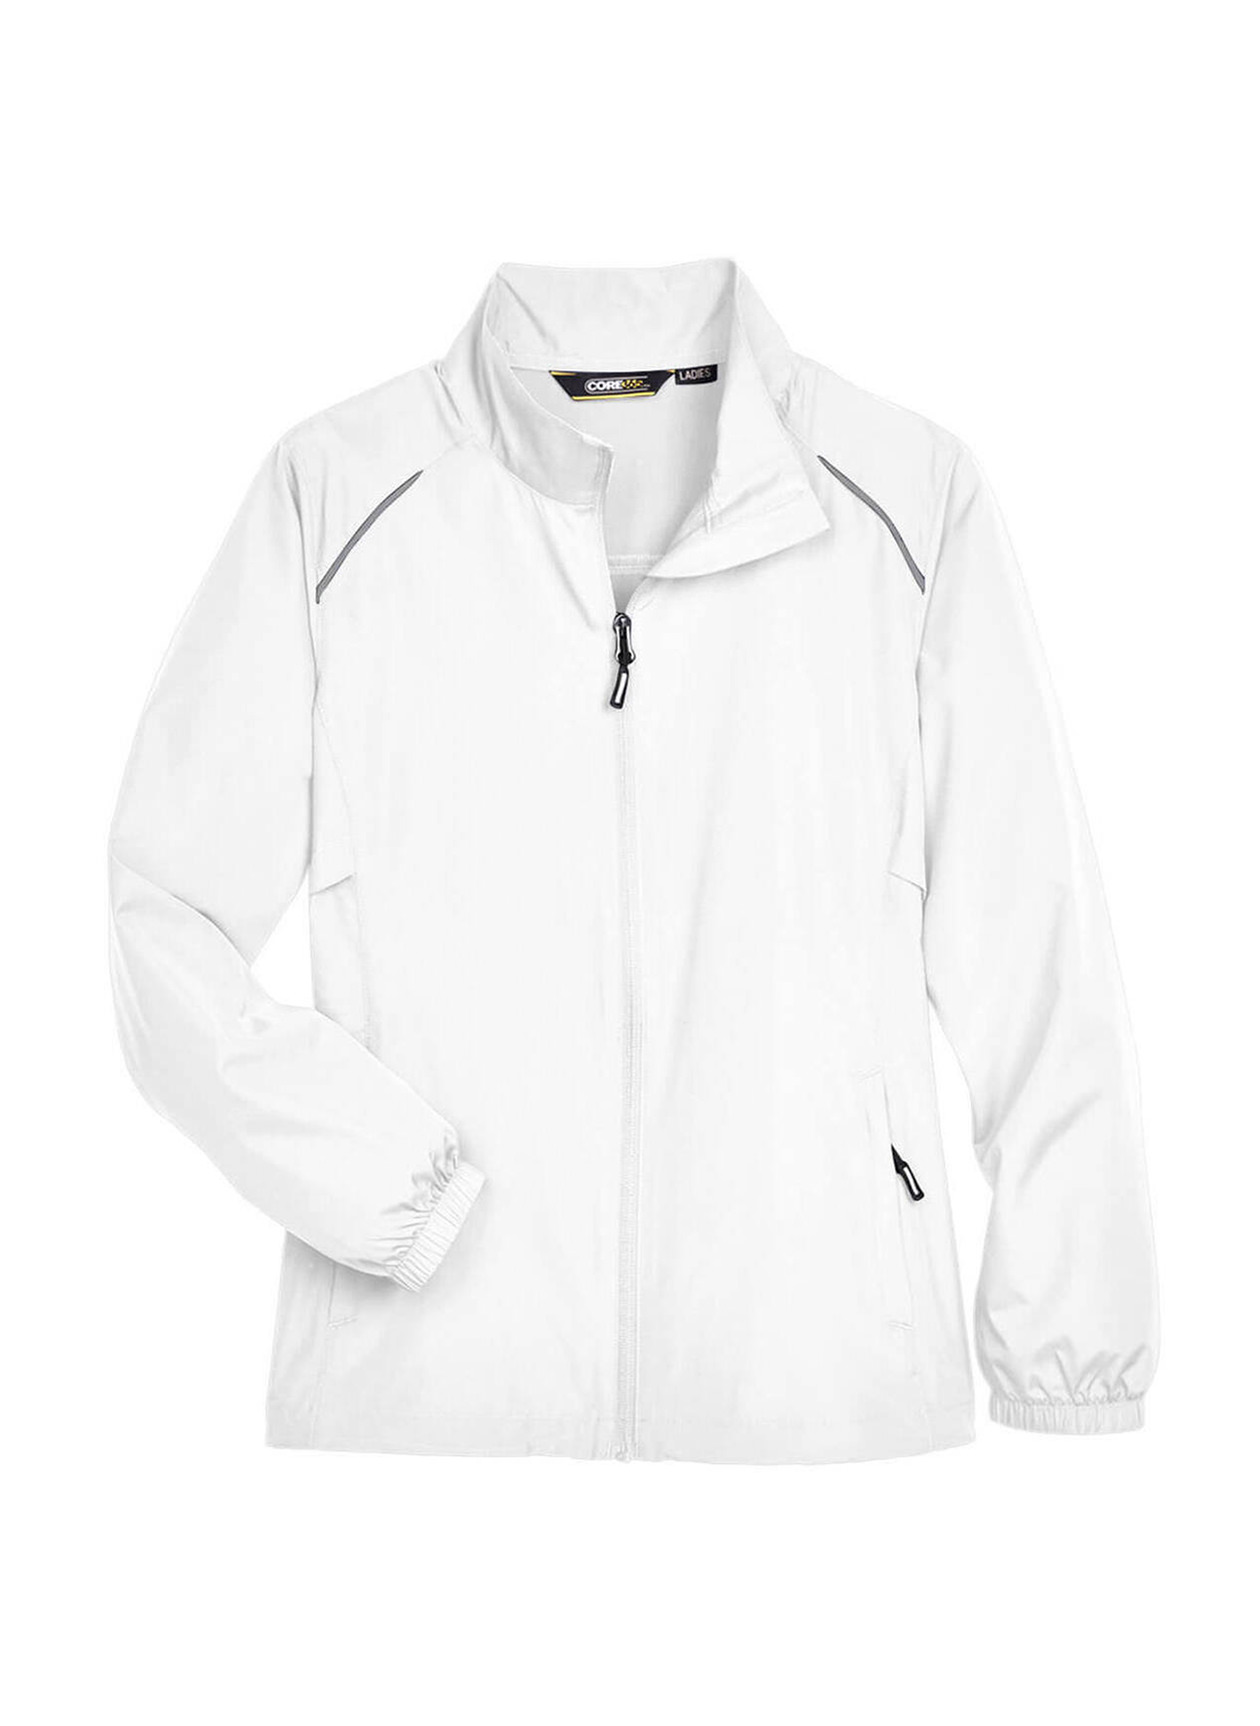 Core 365 Women's White Motivate Unlined Lightweight Jacket